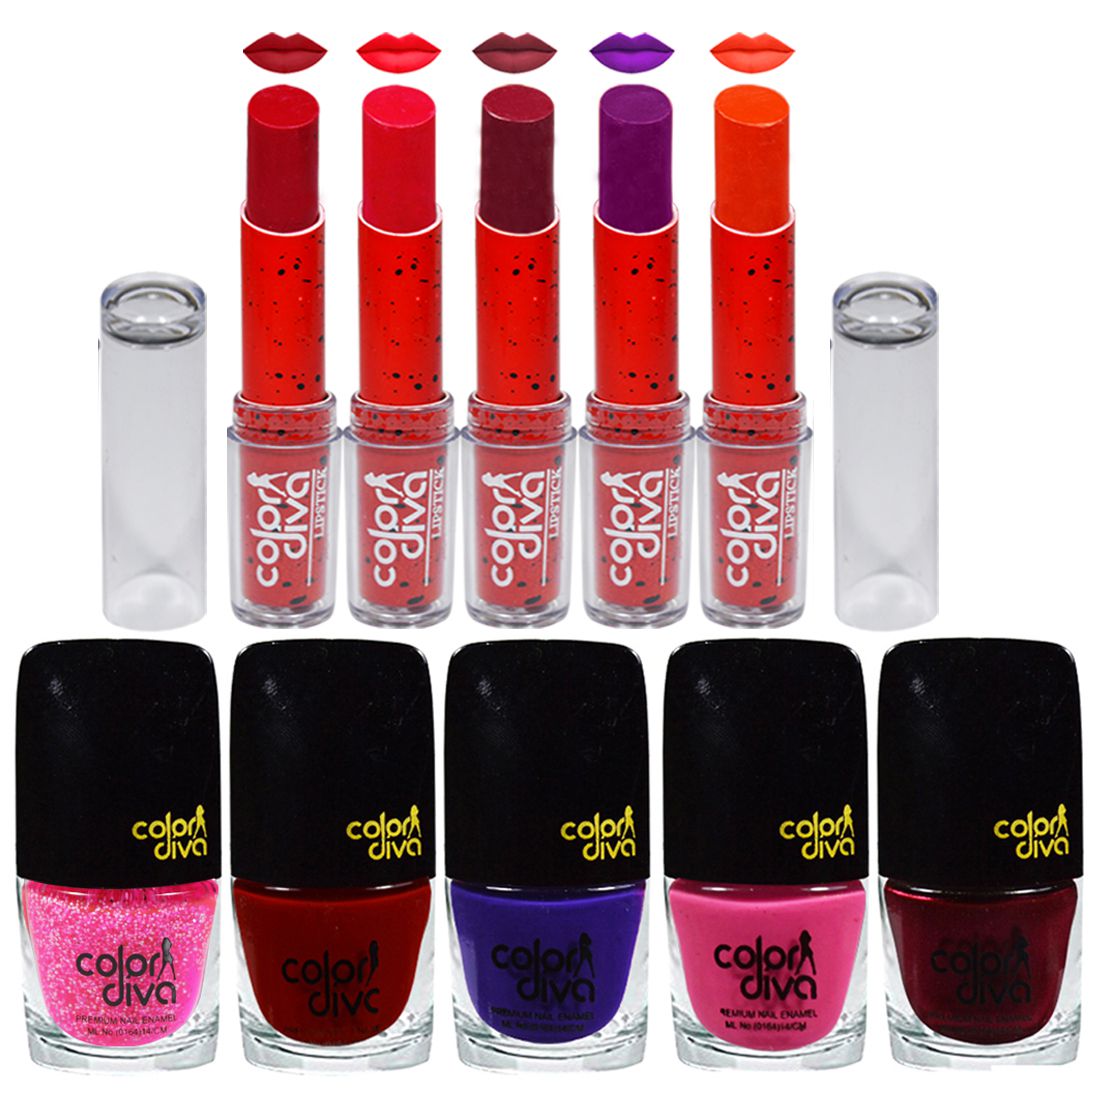     			Color Diva Nail Paint & Lipstick, GC553 Makeup Kit Pack of 10